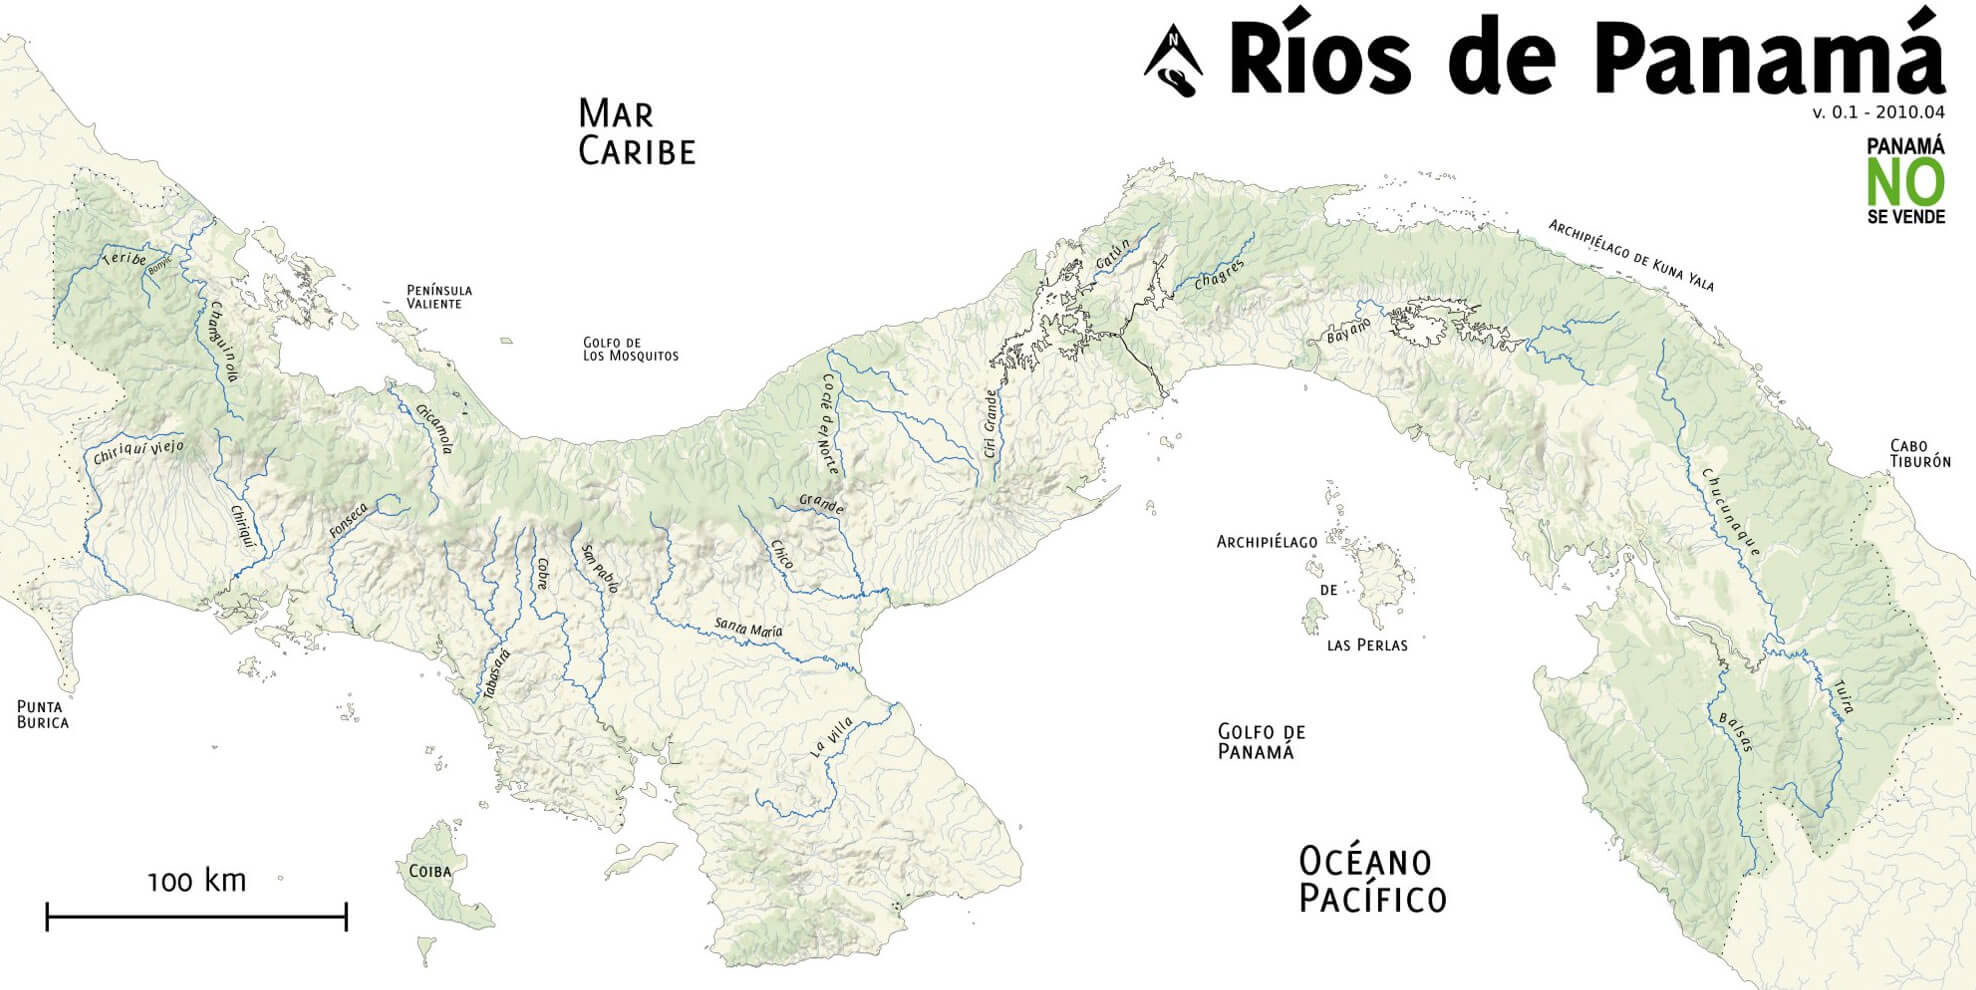 rivers map of panama 2010